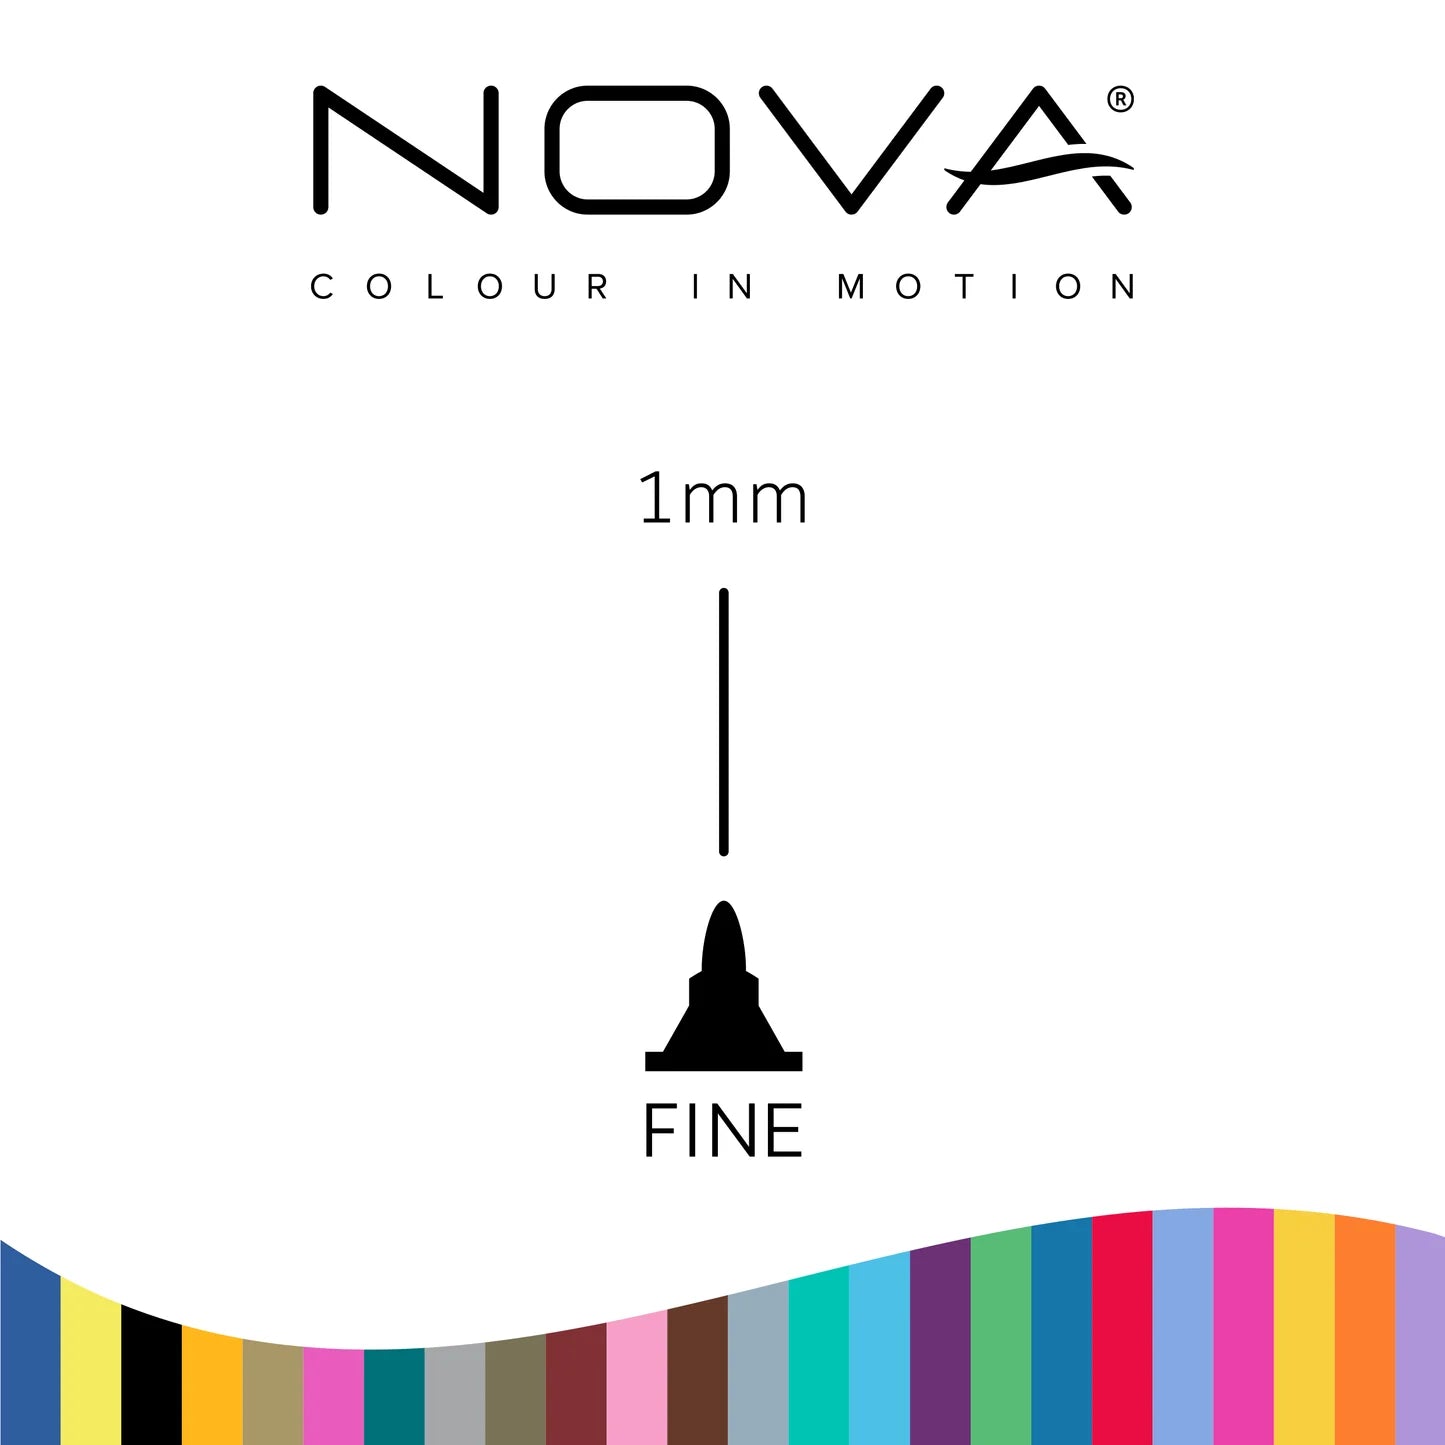 Nova Fine-tip Fabric Marker Pens - 24pc